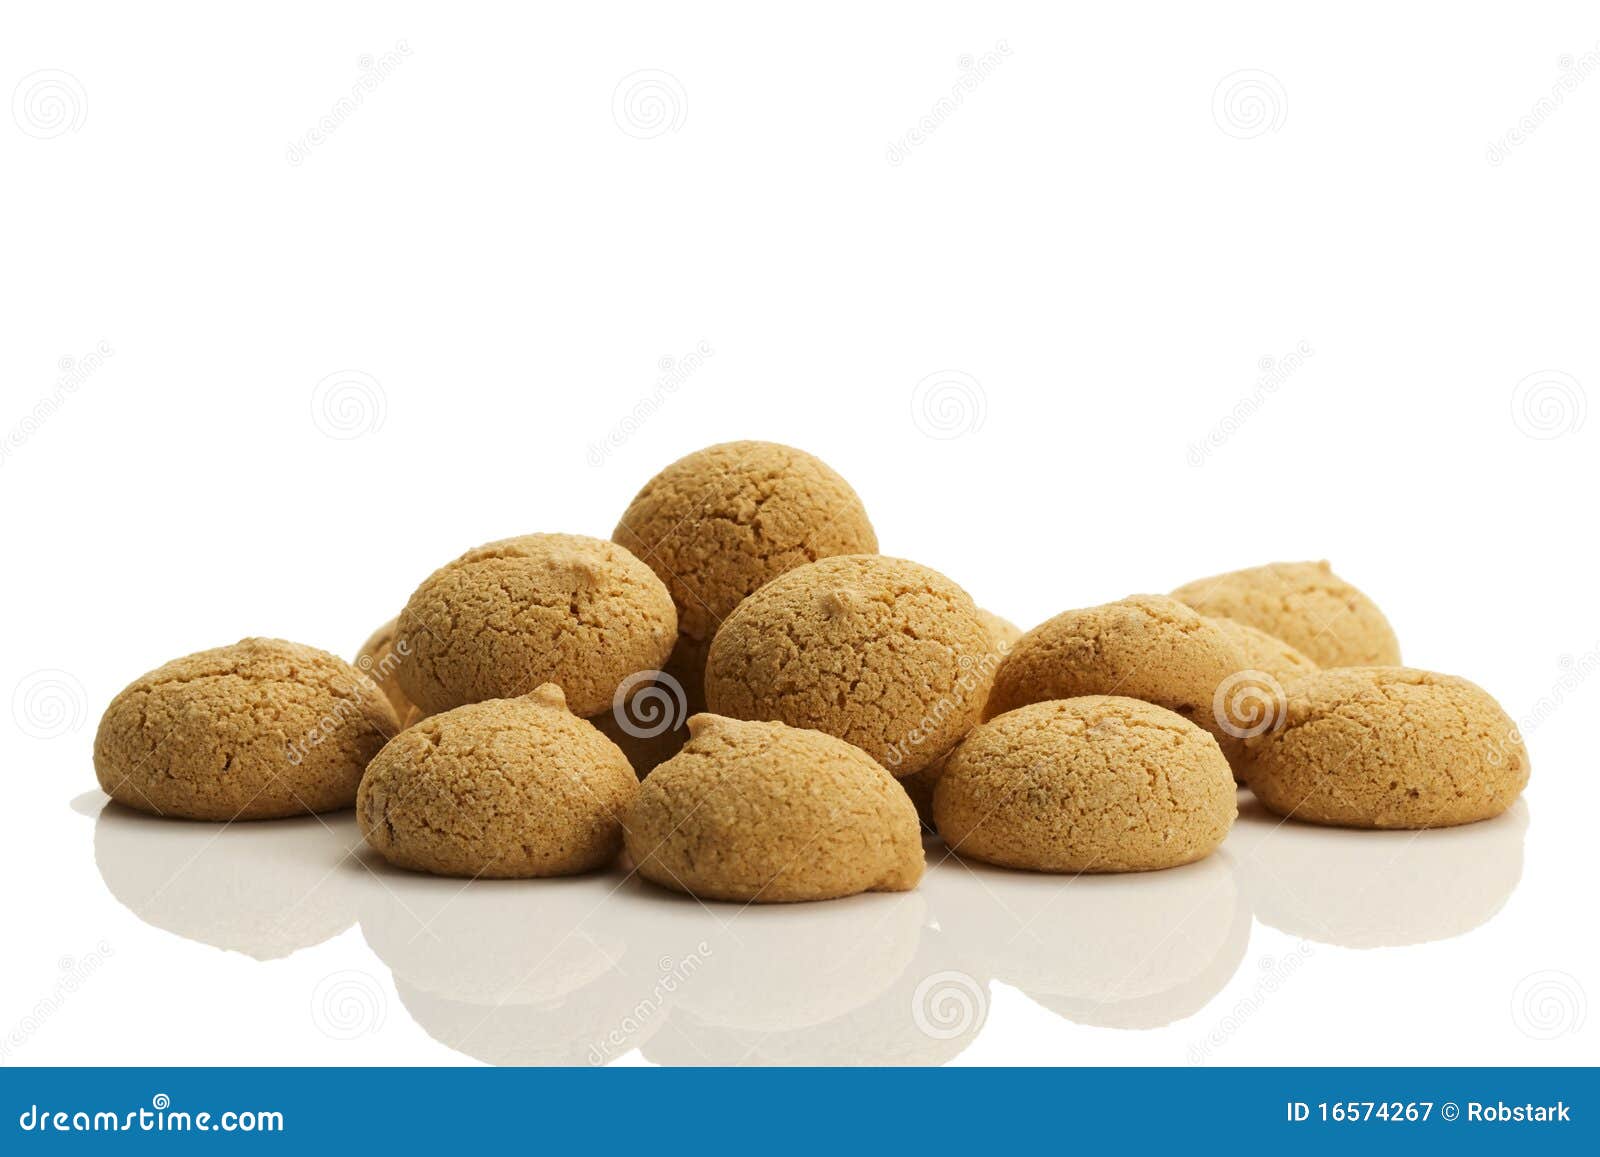 Some amarettini stock image. Image of italian, cookie - 16574267